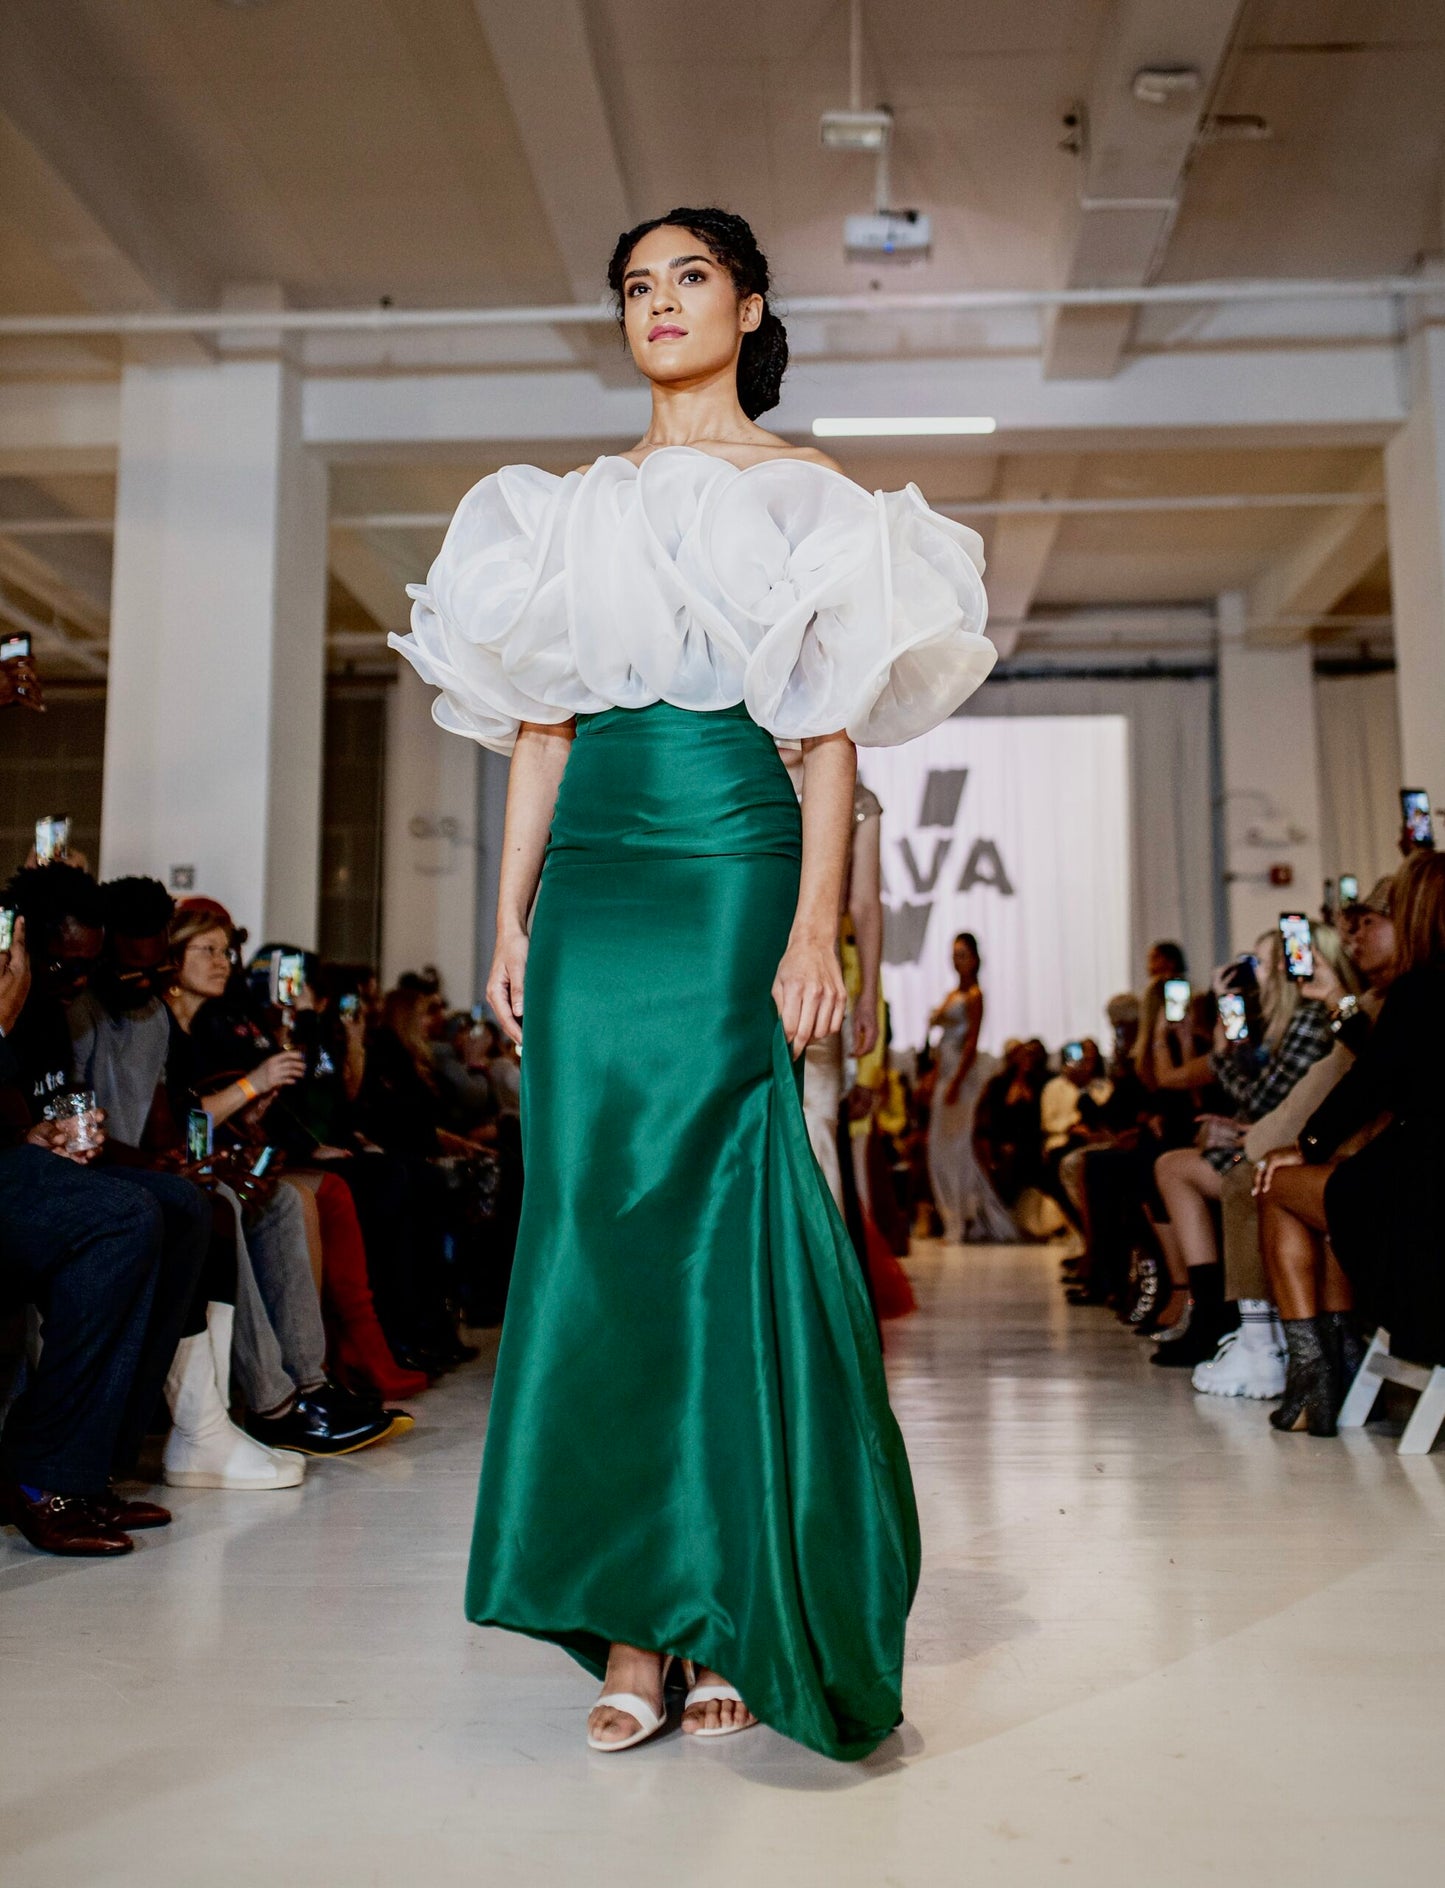 Elegant green & white dress